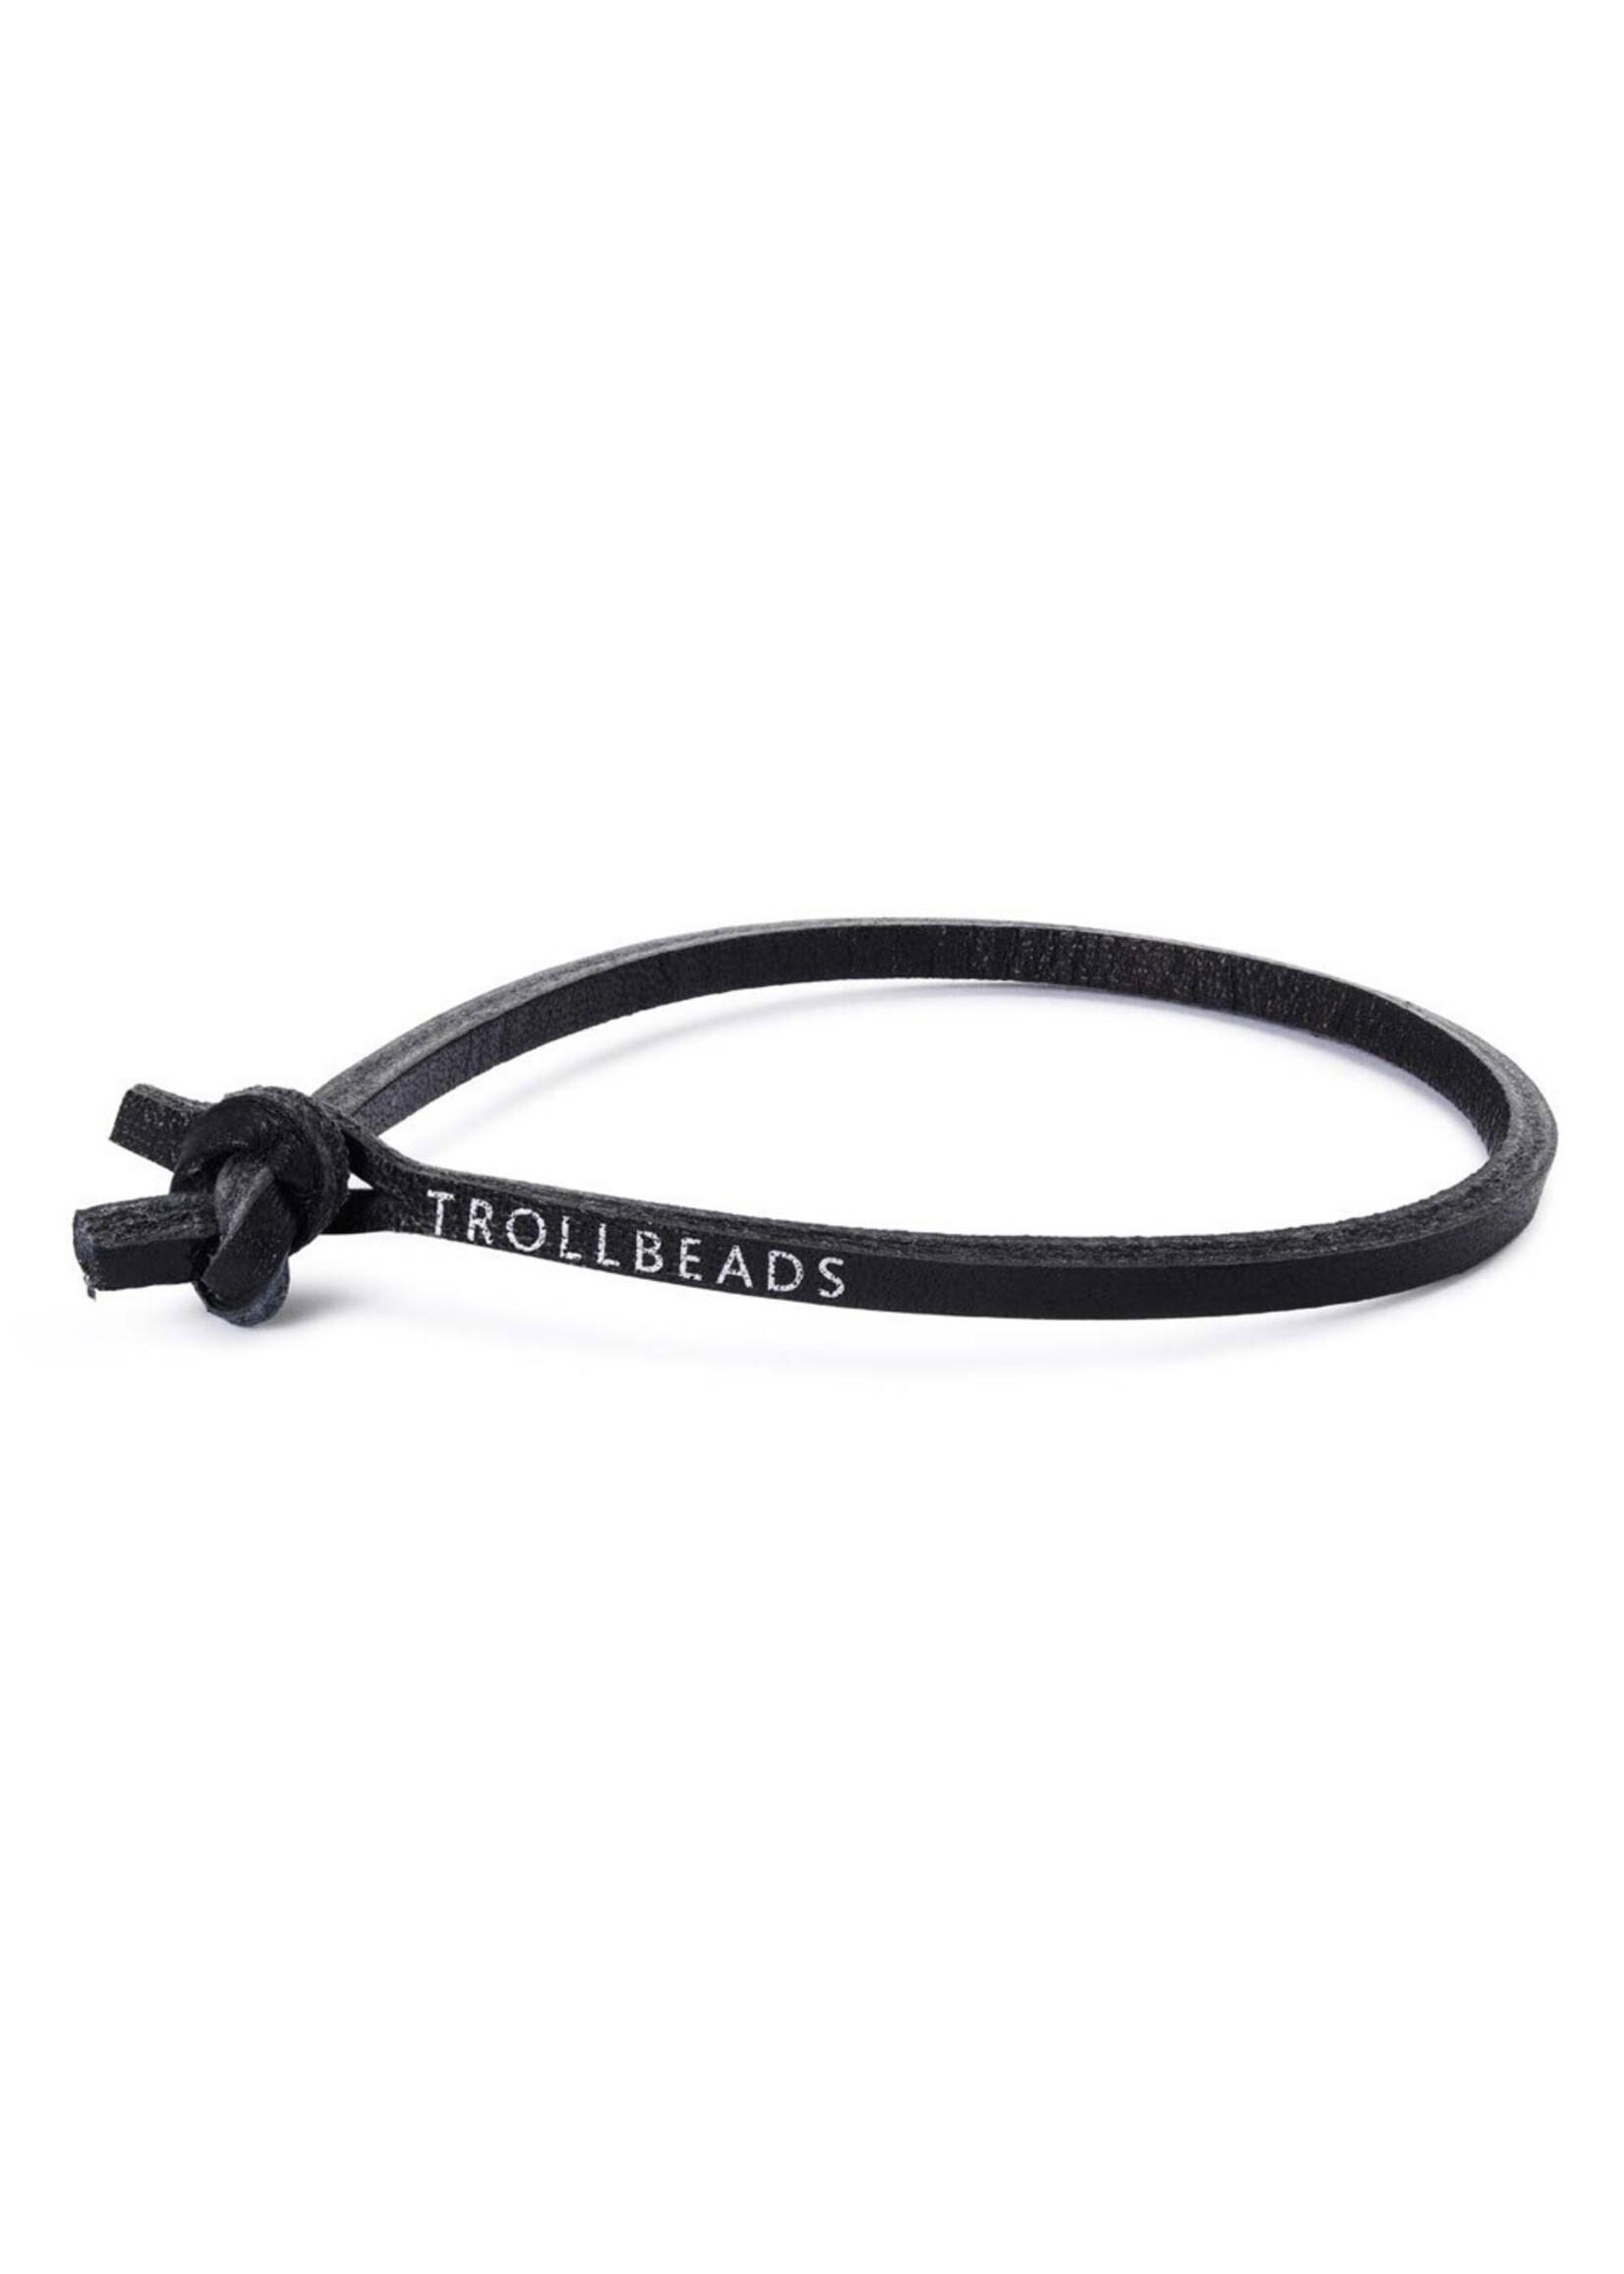 Trollbeads Trollbeads TLEBR-00056 armband zwart leder 27cm